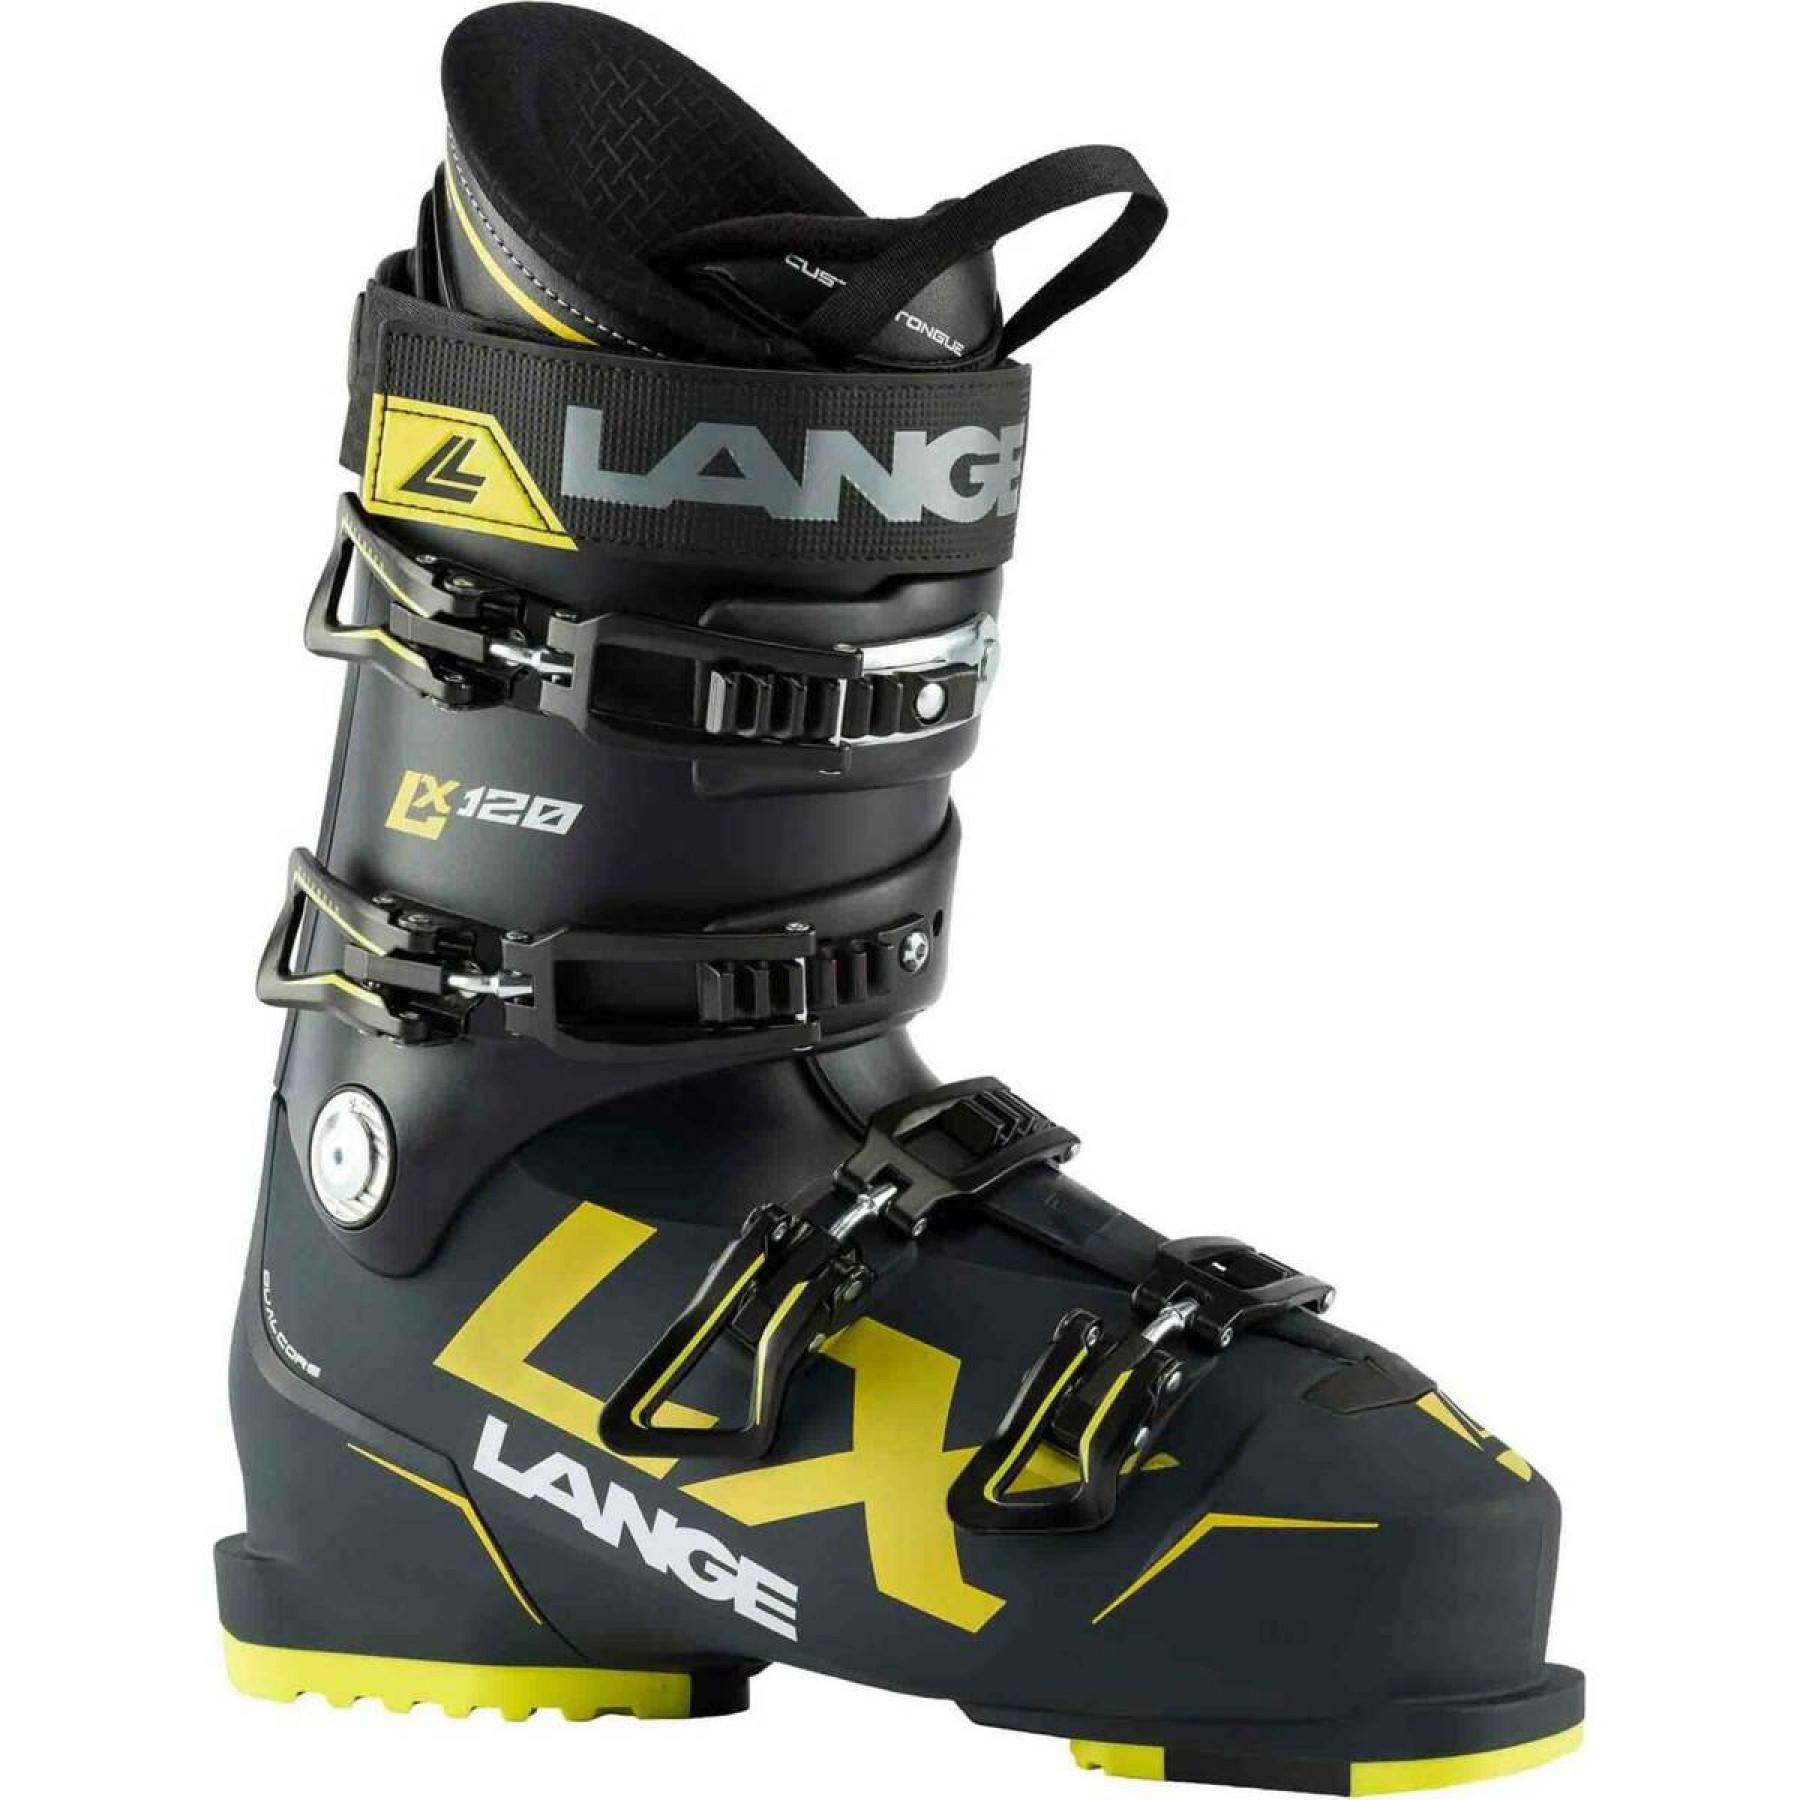 Buty narciarskie Lange lx 120